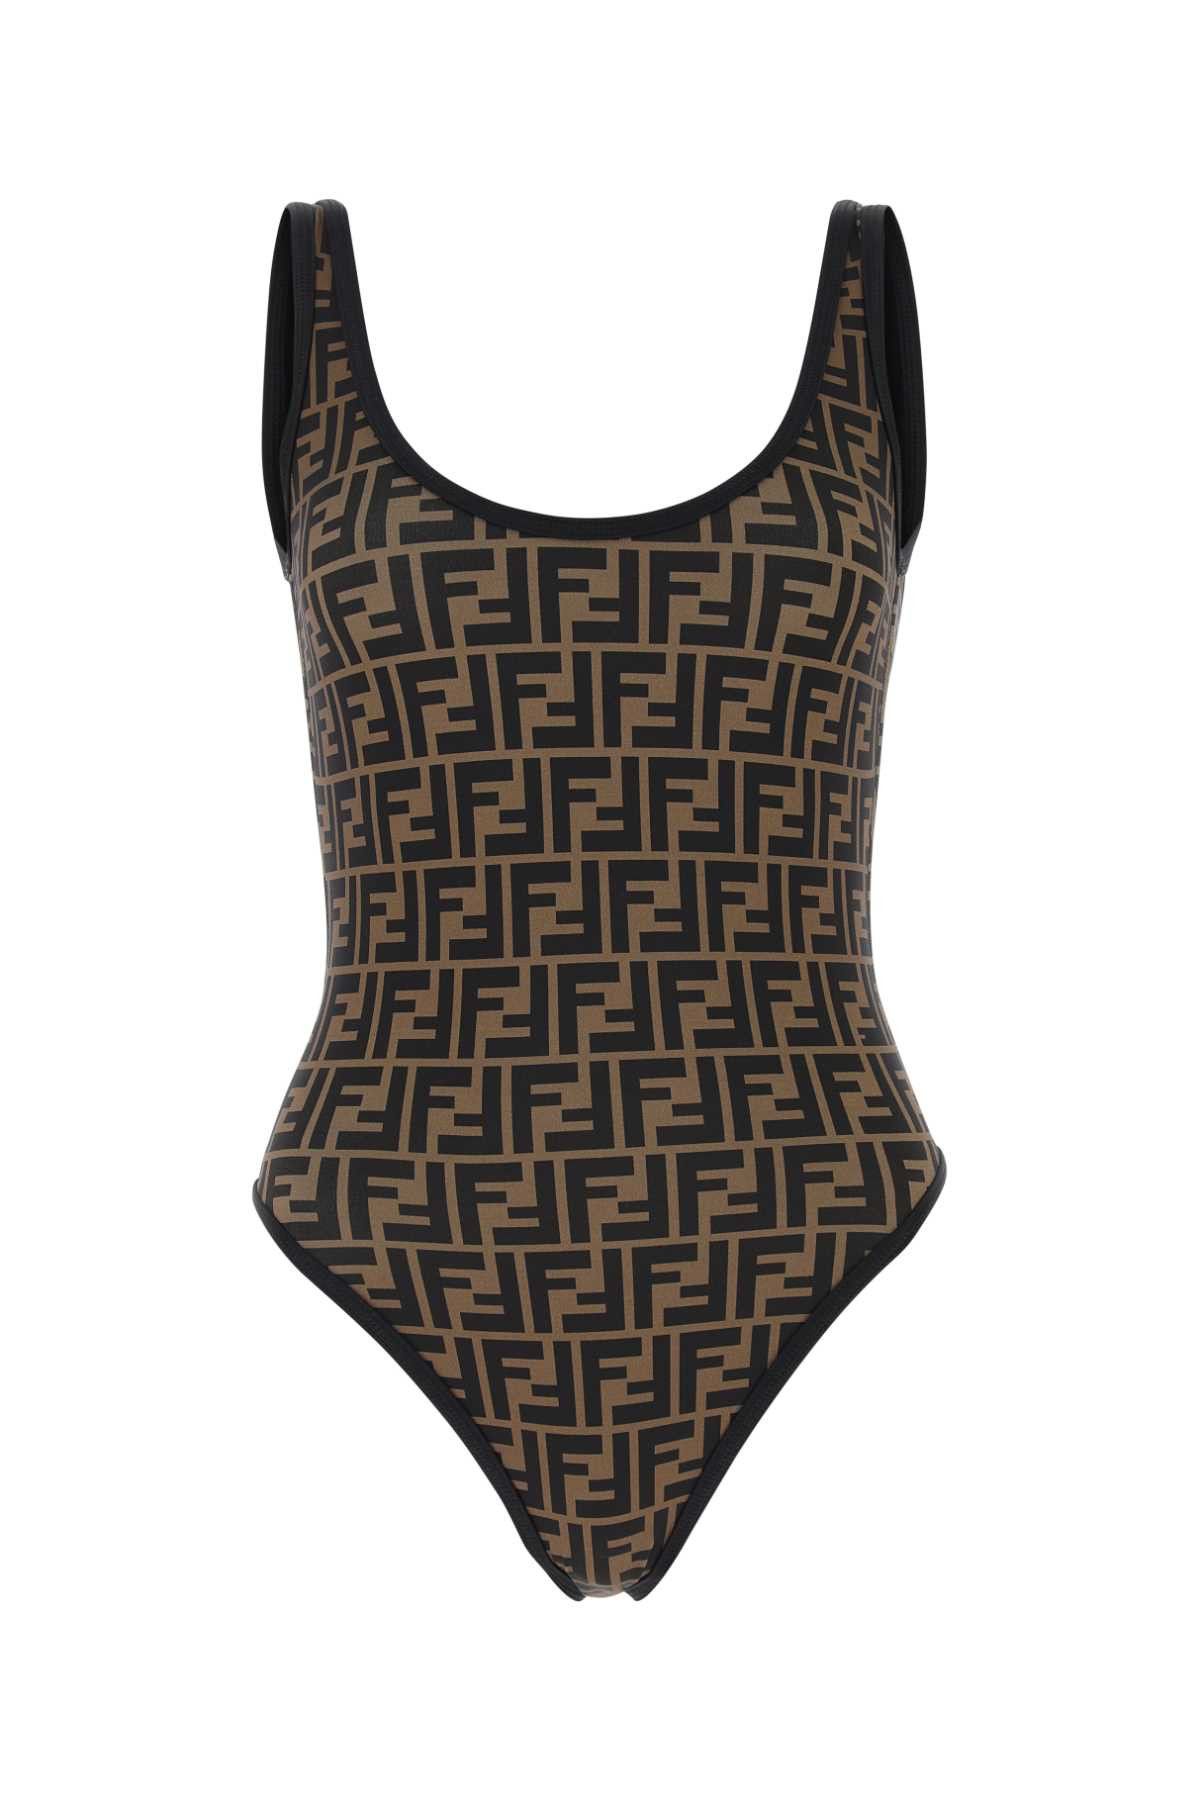 Fendi Printed Stretch Nylon Swimsuit | Grailed